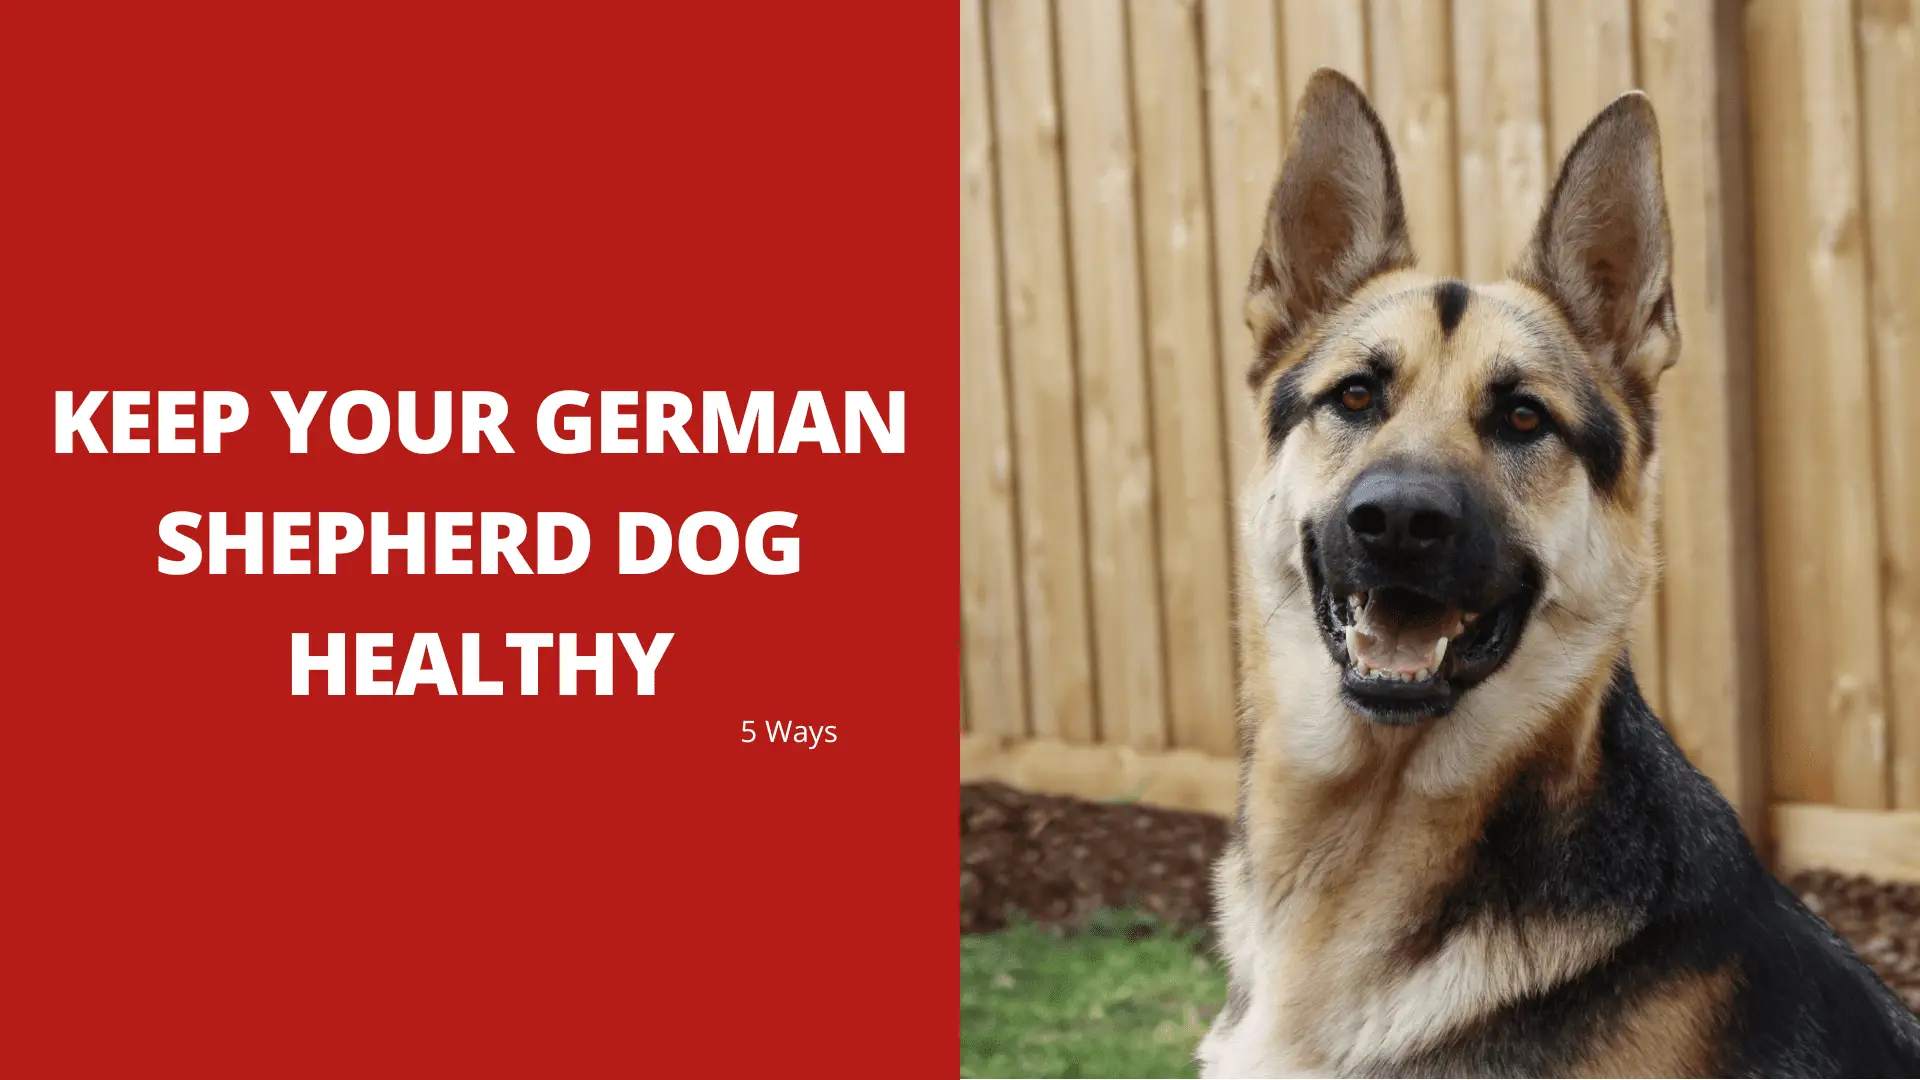 5 Ways to Keep Your German Shepherd Dog Healthy